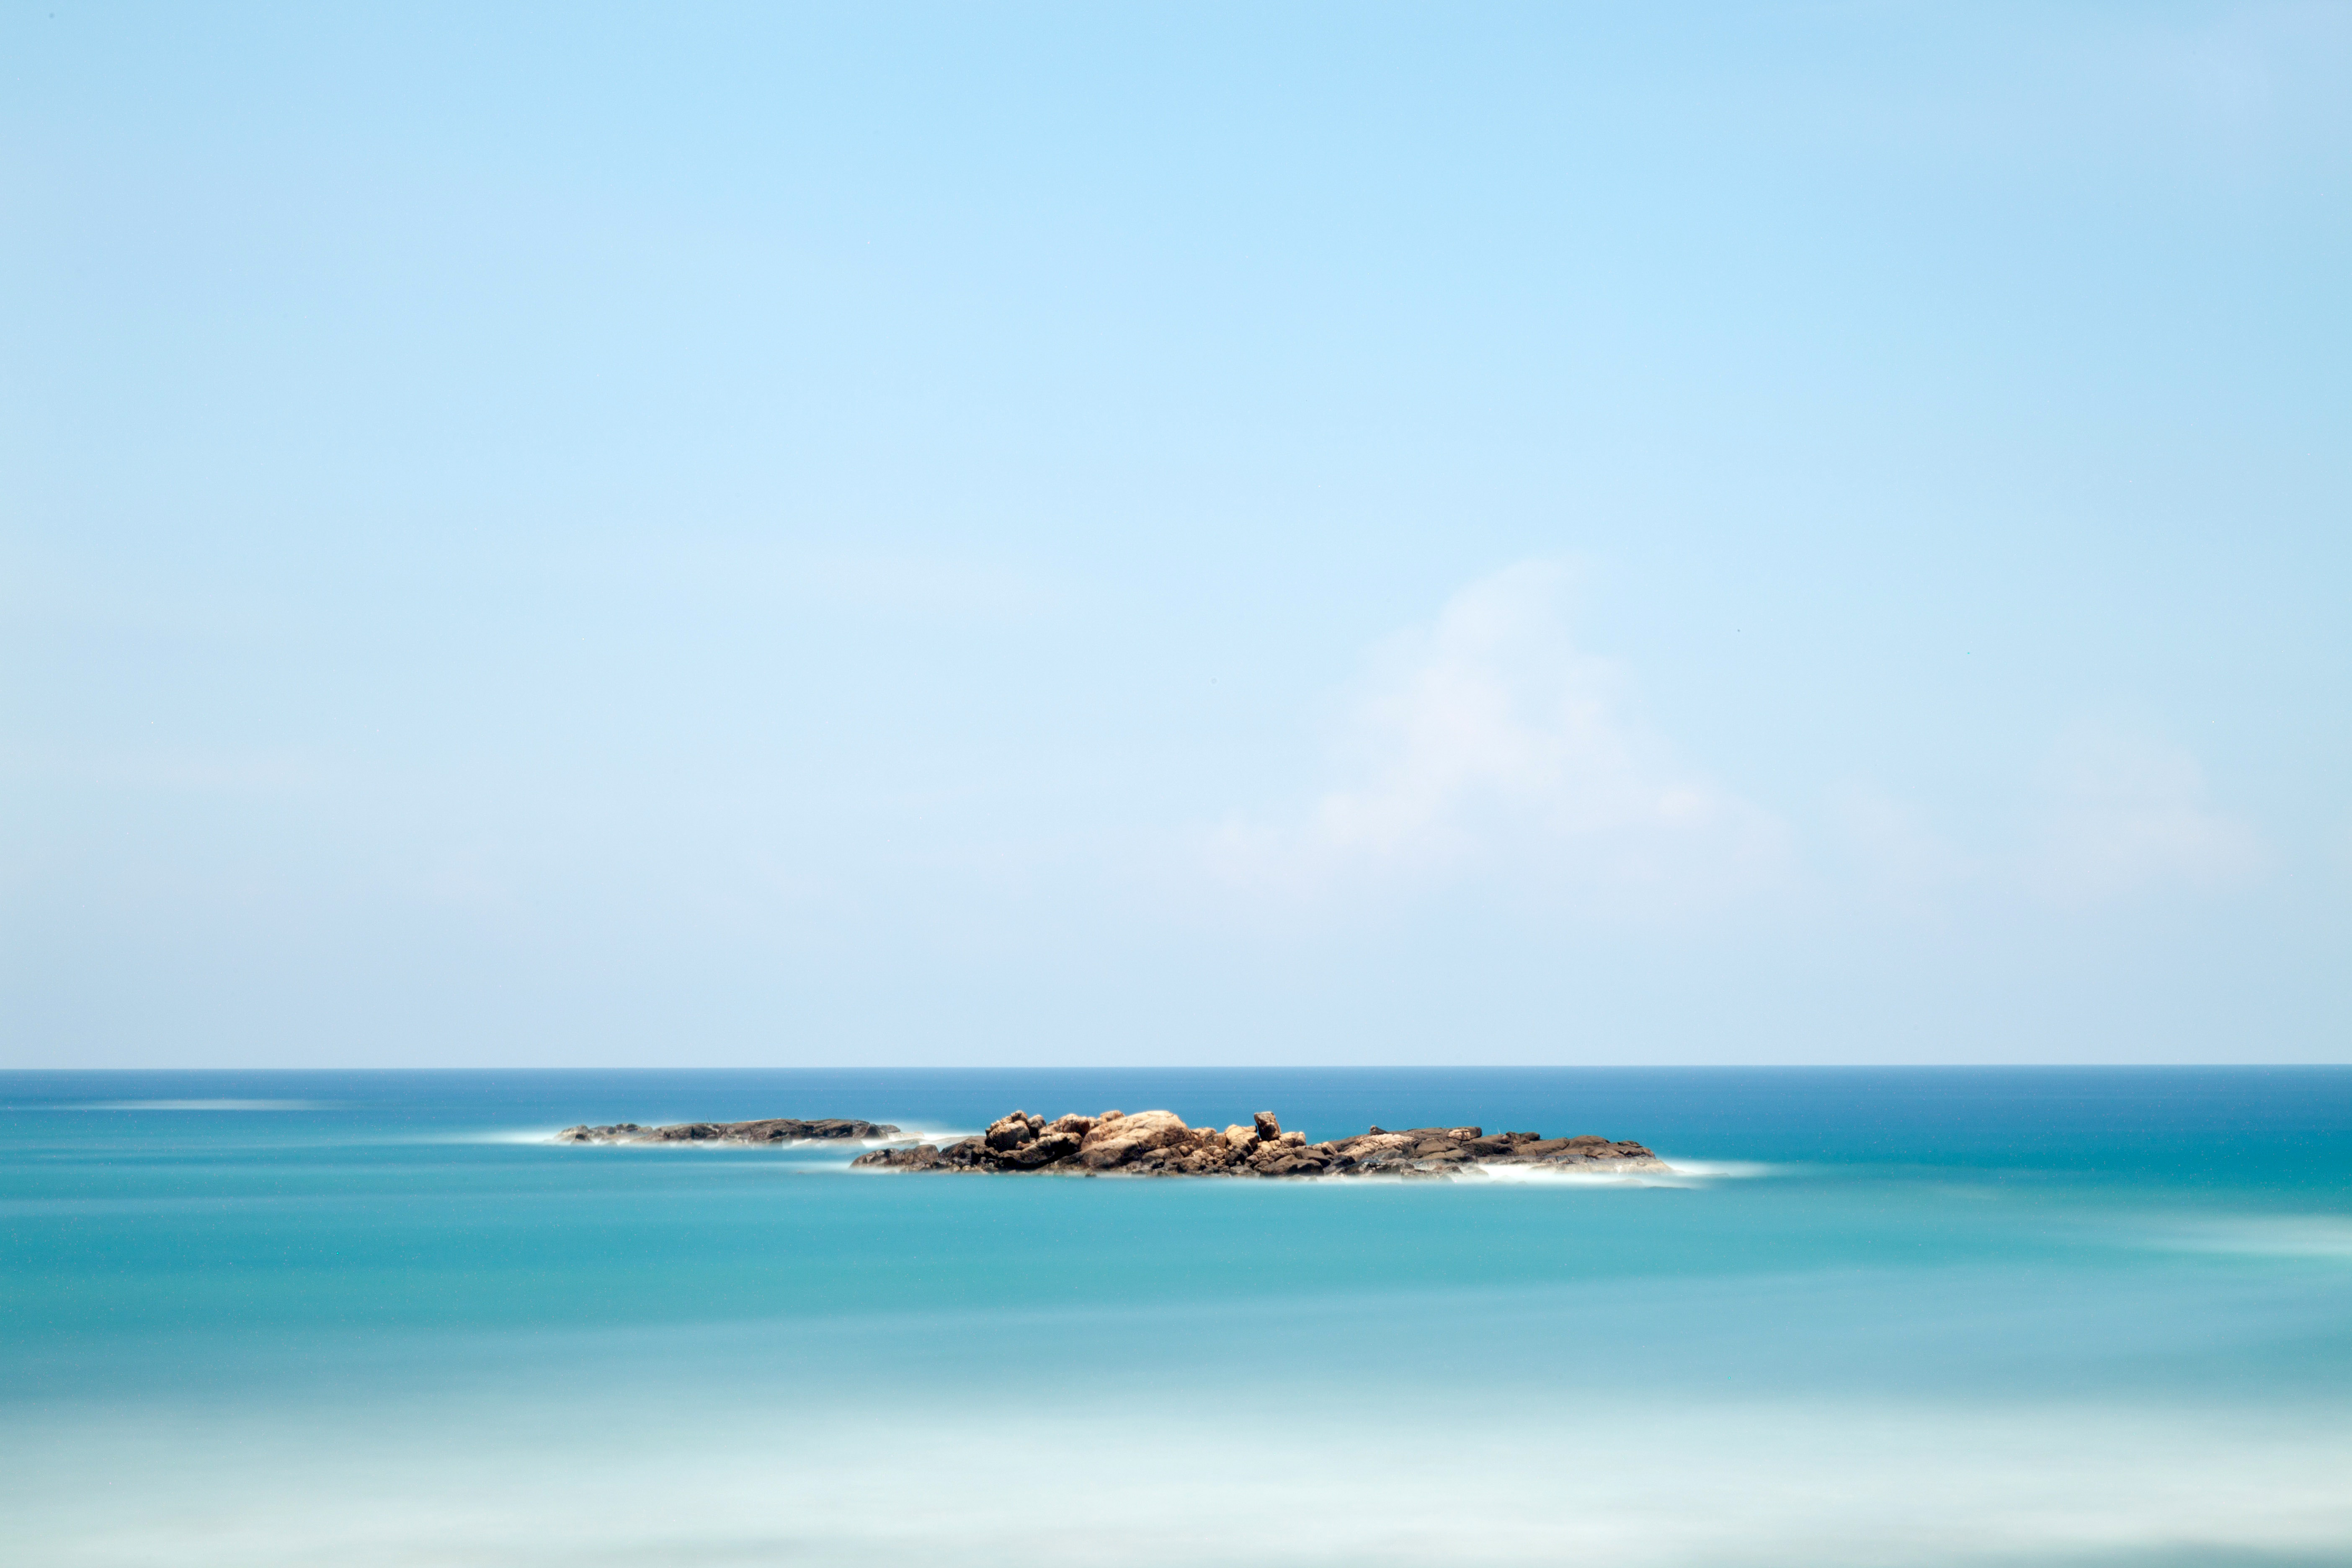 Free Stock Photo of Rock Island in the ocean in Sri Lanka 